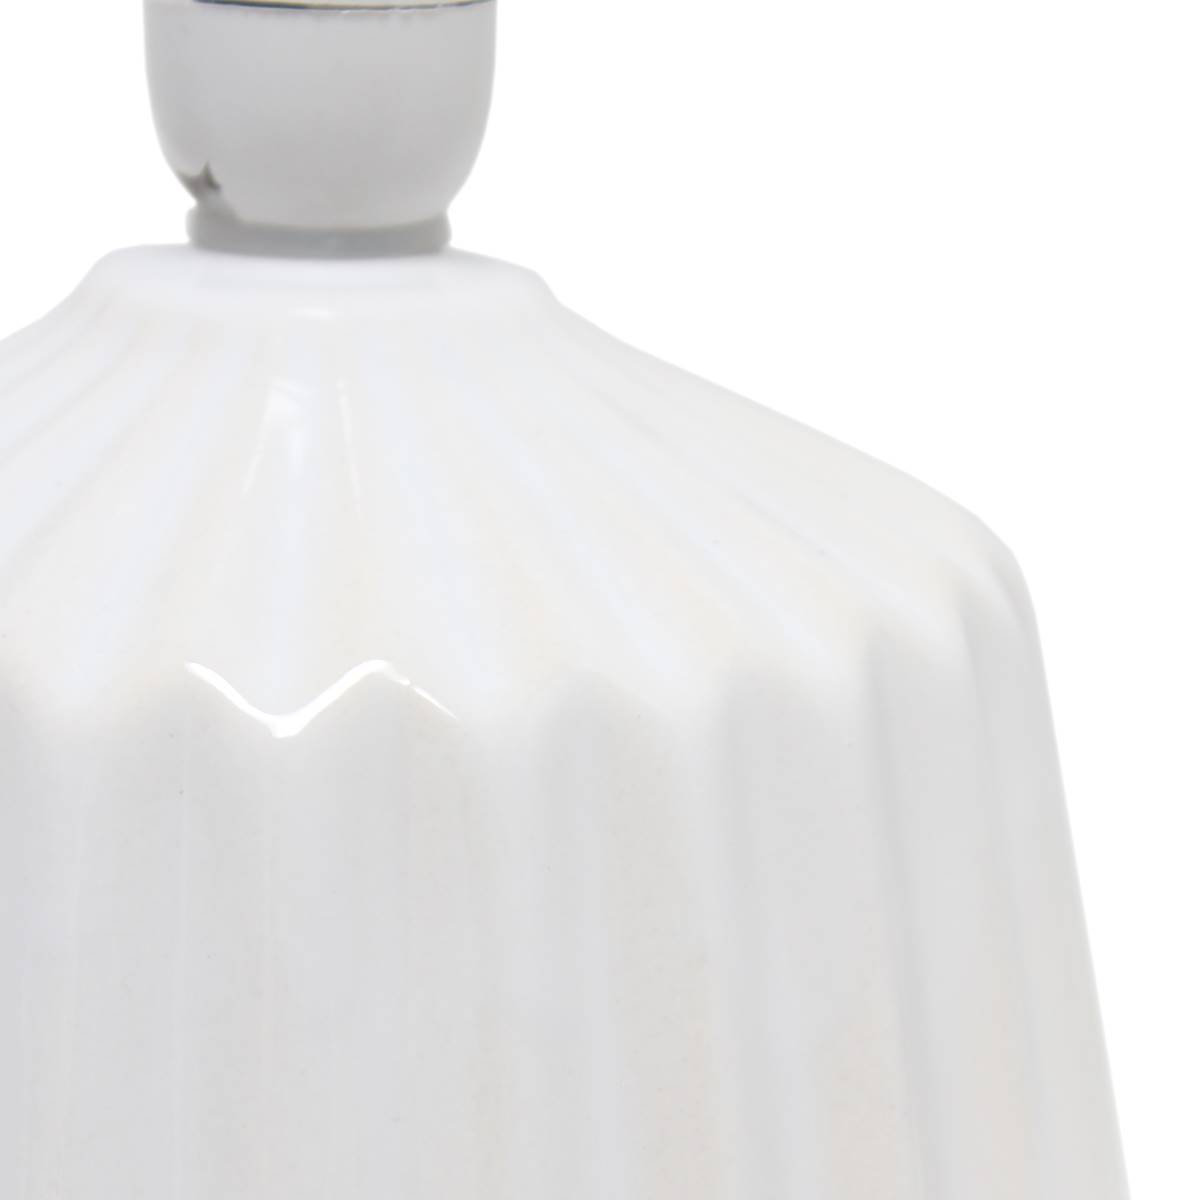 Simple Designs Petite Off White Ceramic Pleated Base Table Lamp